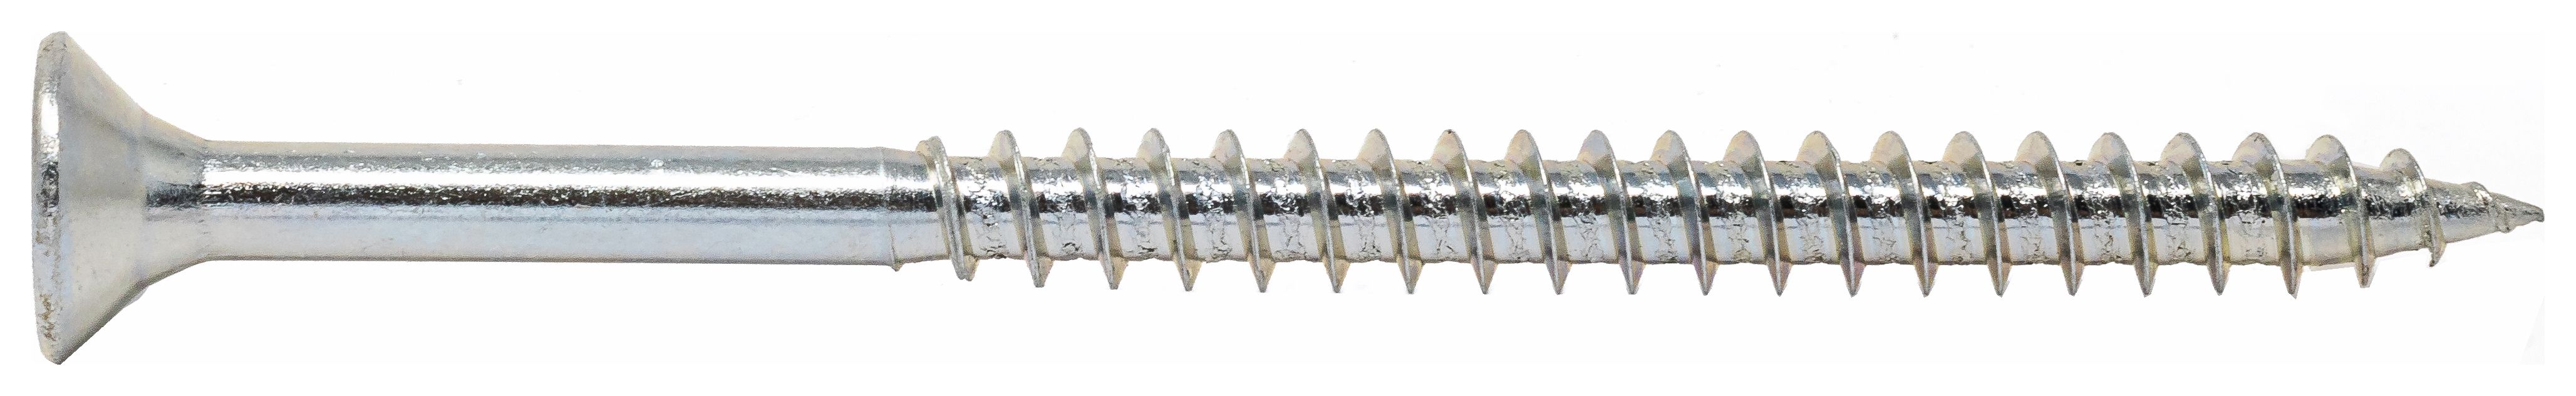 Wickes Single Thread Zinc Plated Screw - 3 X 30mm Pack Of 200